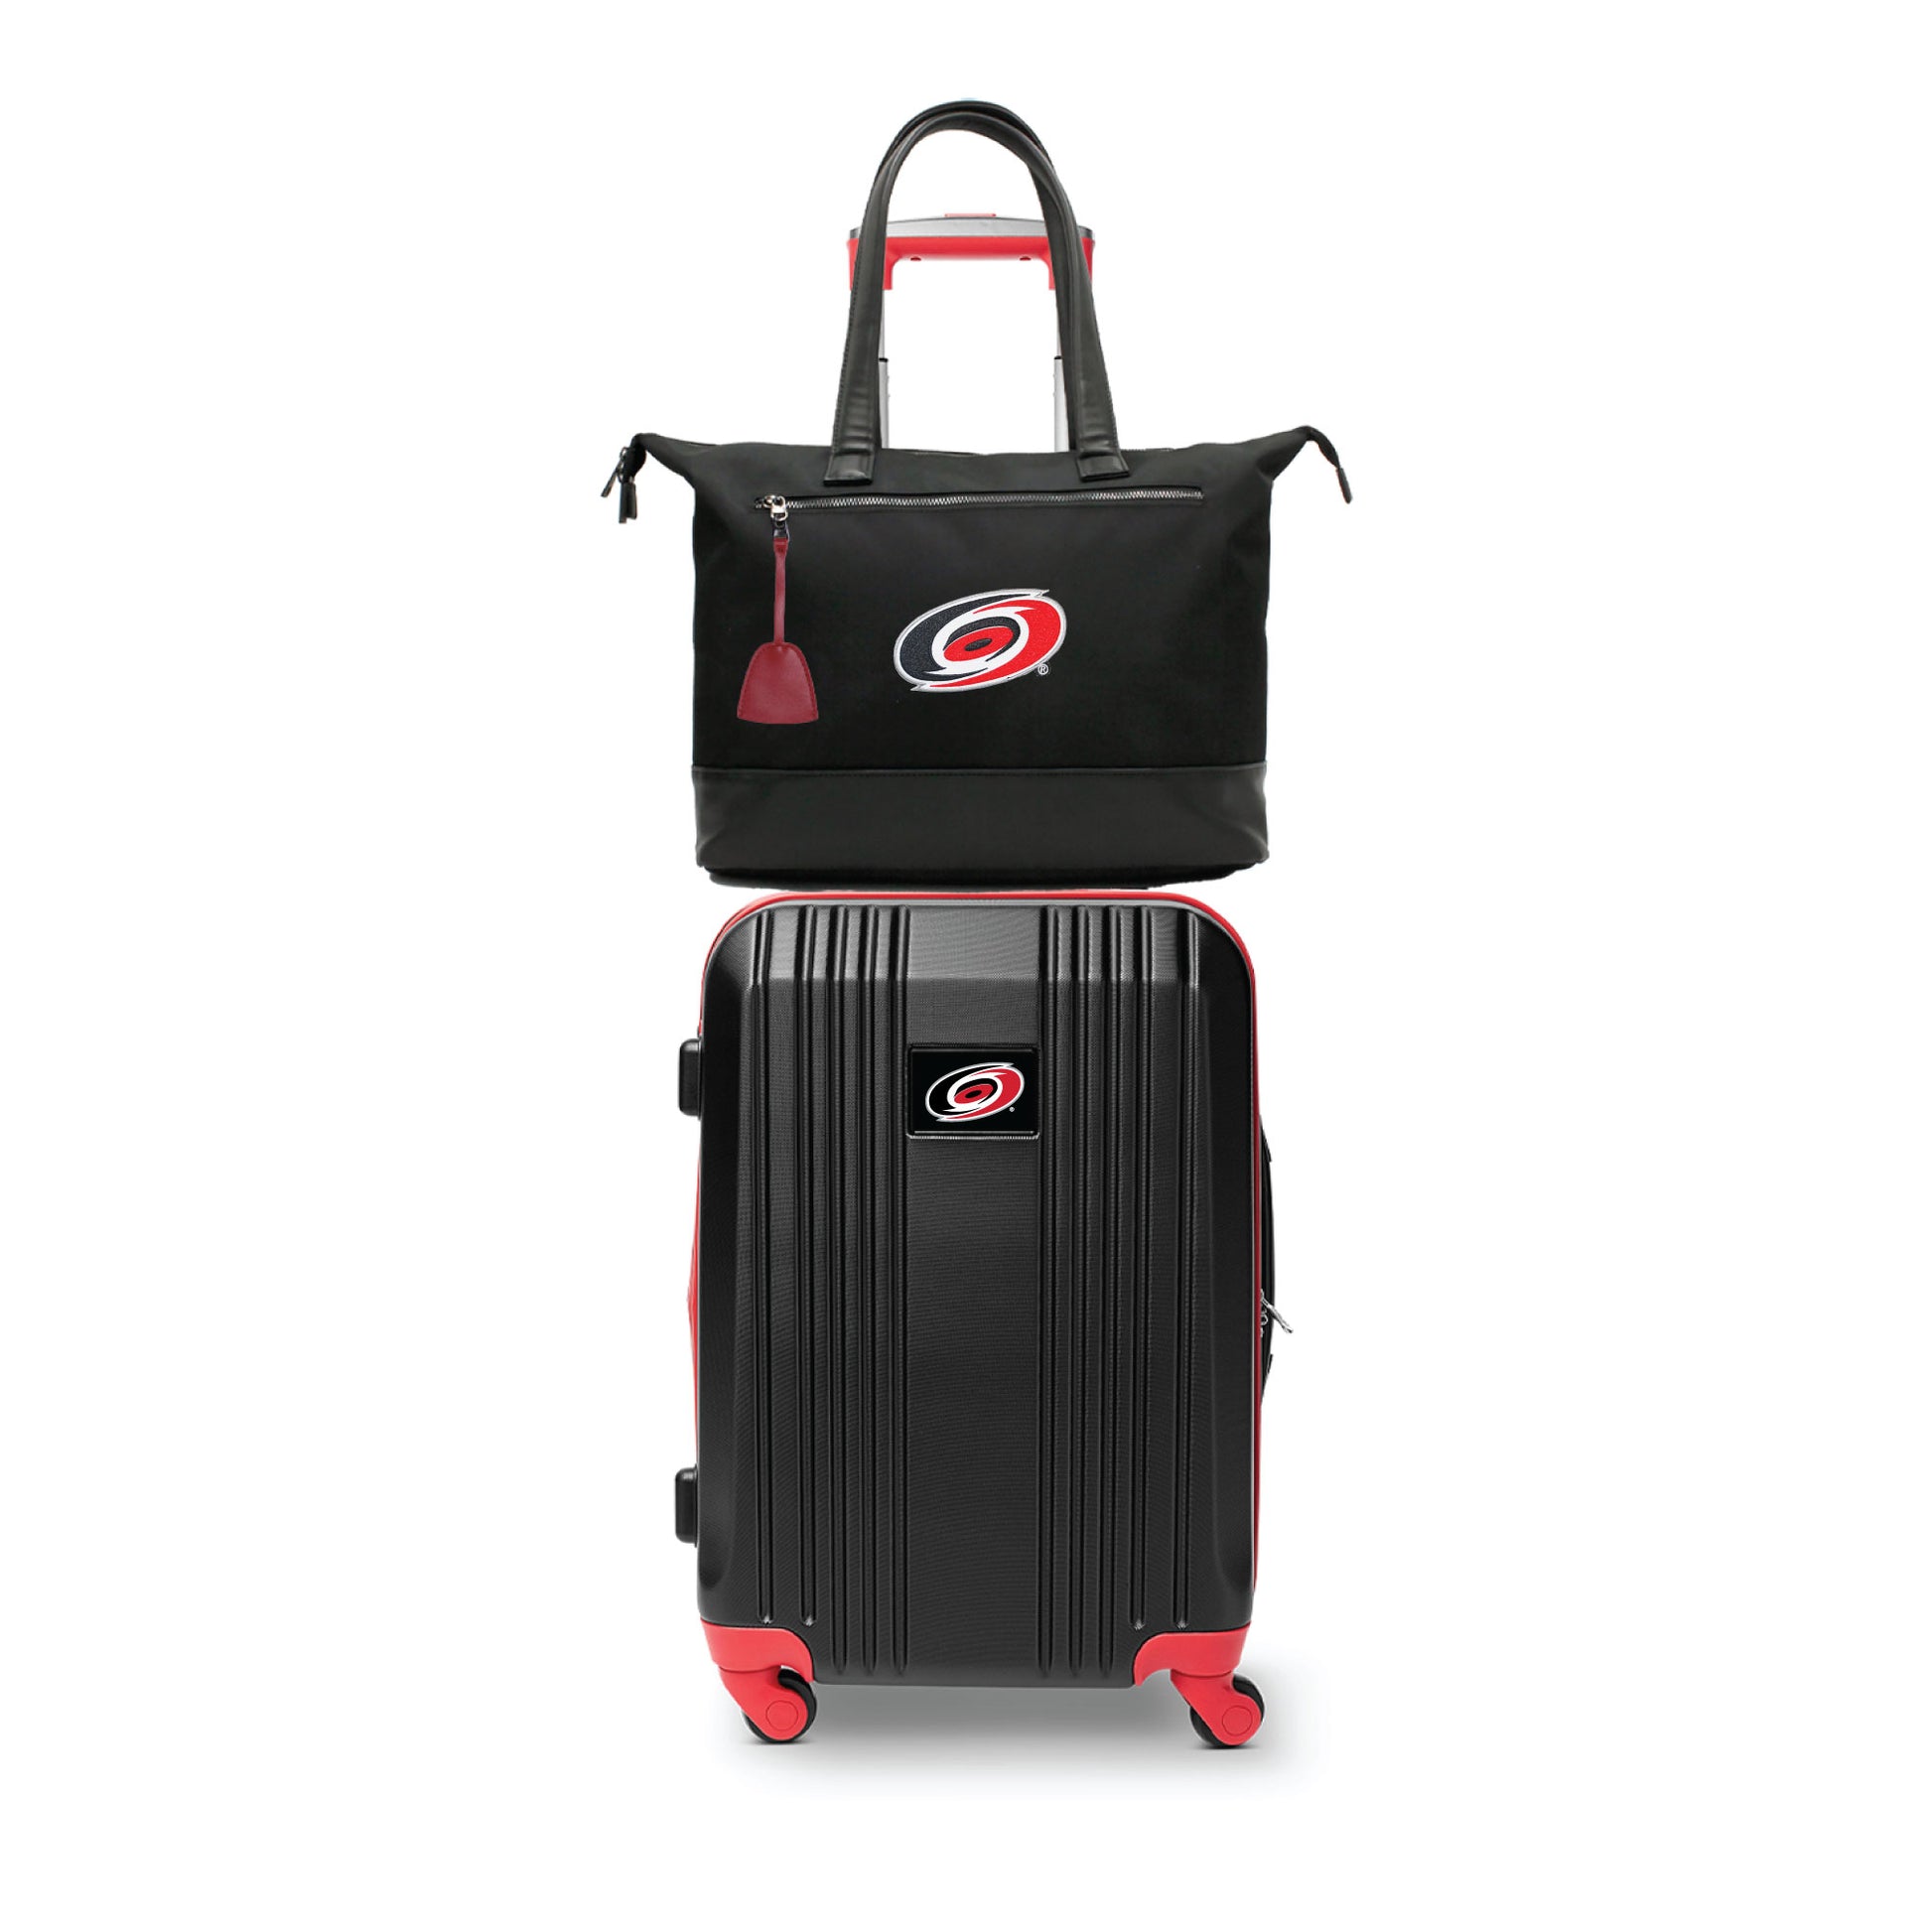 Carolina Hurricanes Premium Laptop Tote Bag and Luggage Set